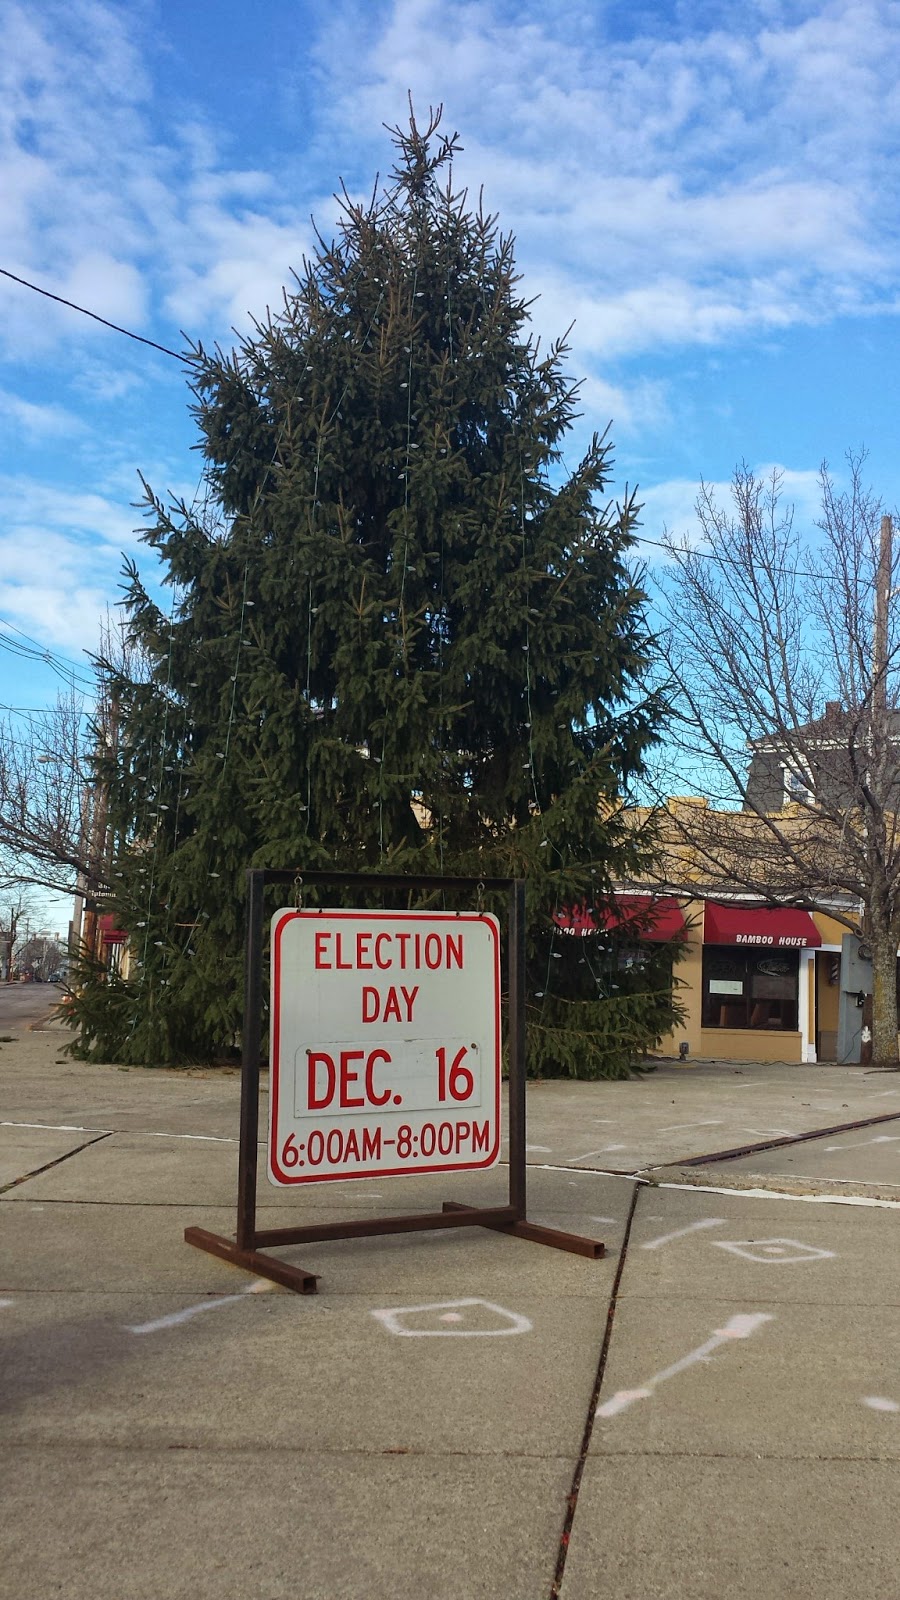 Election day reminder - Dec 16